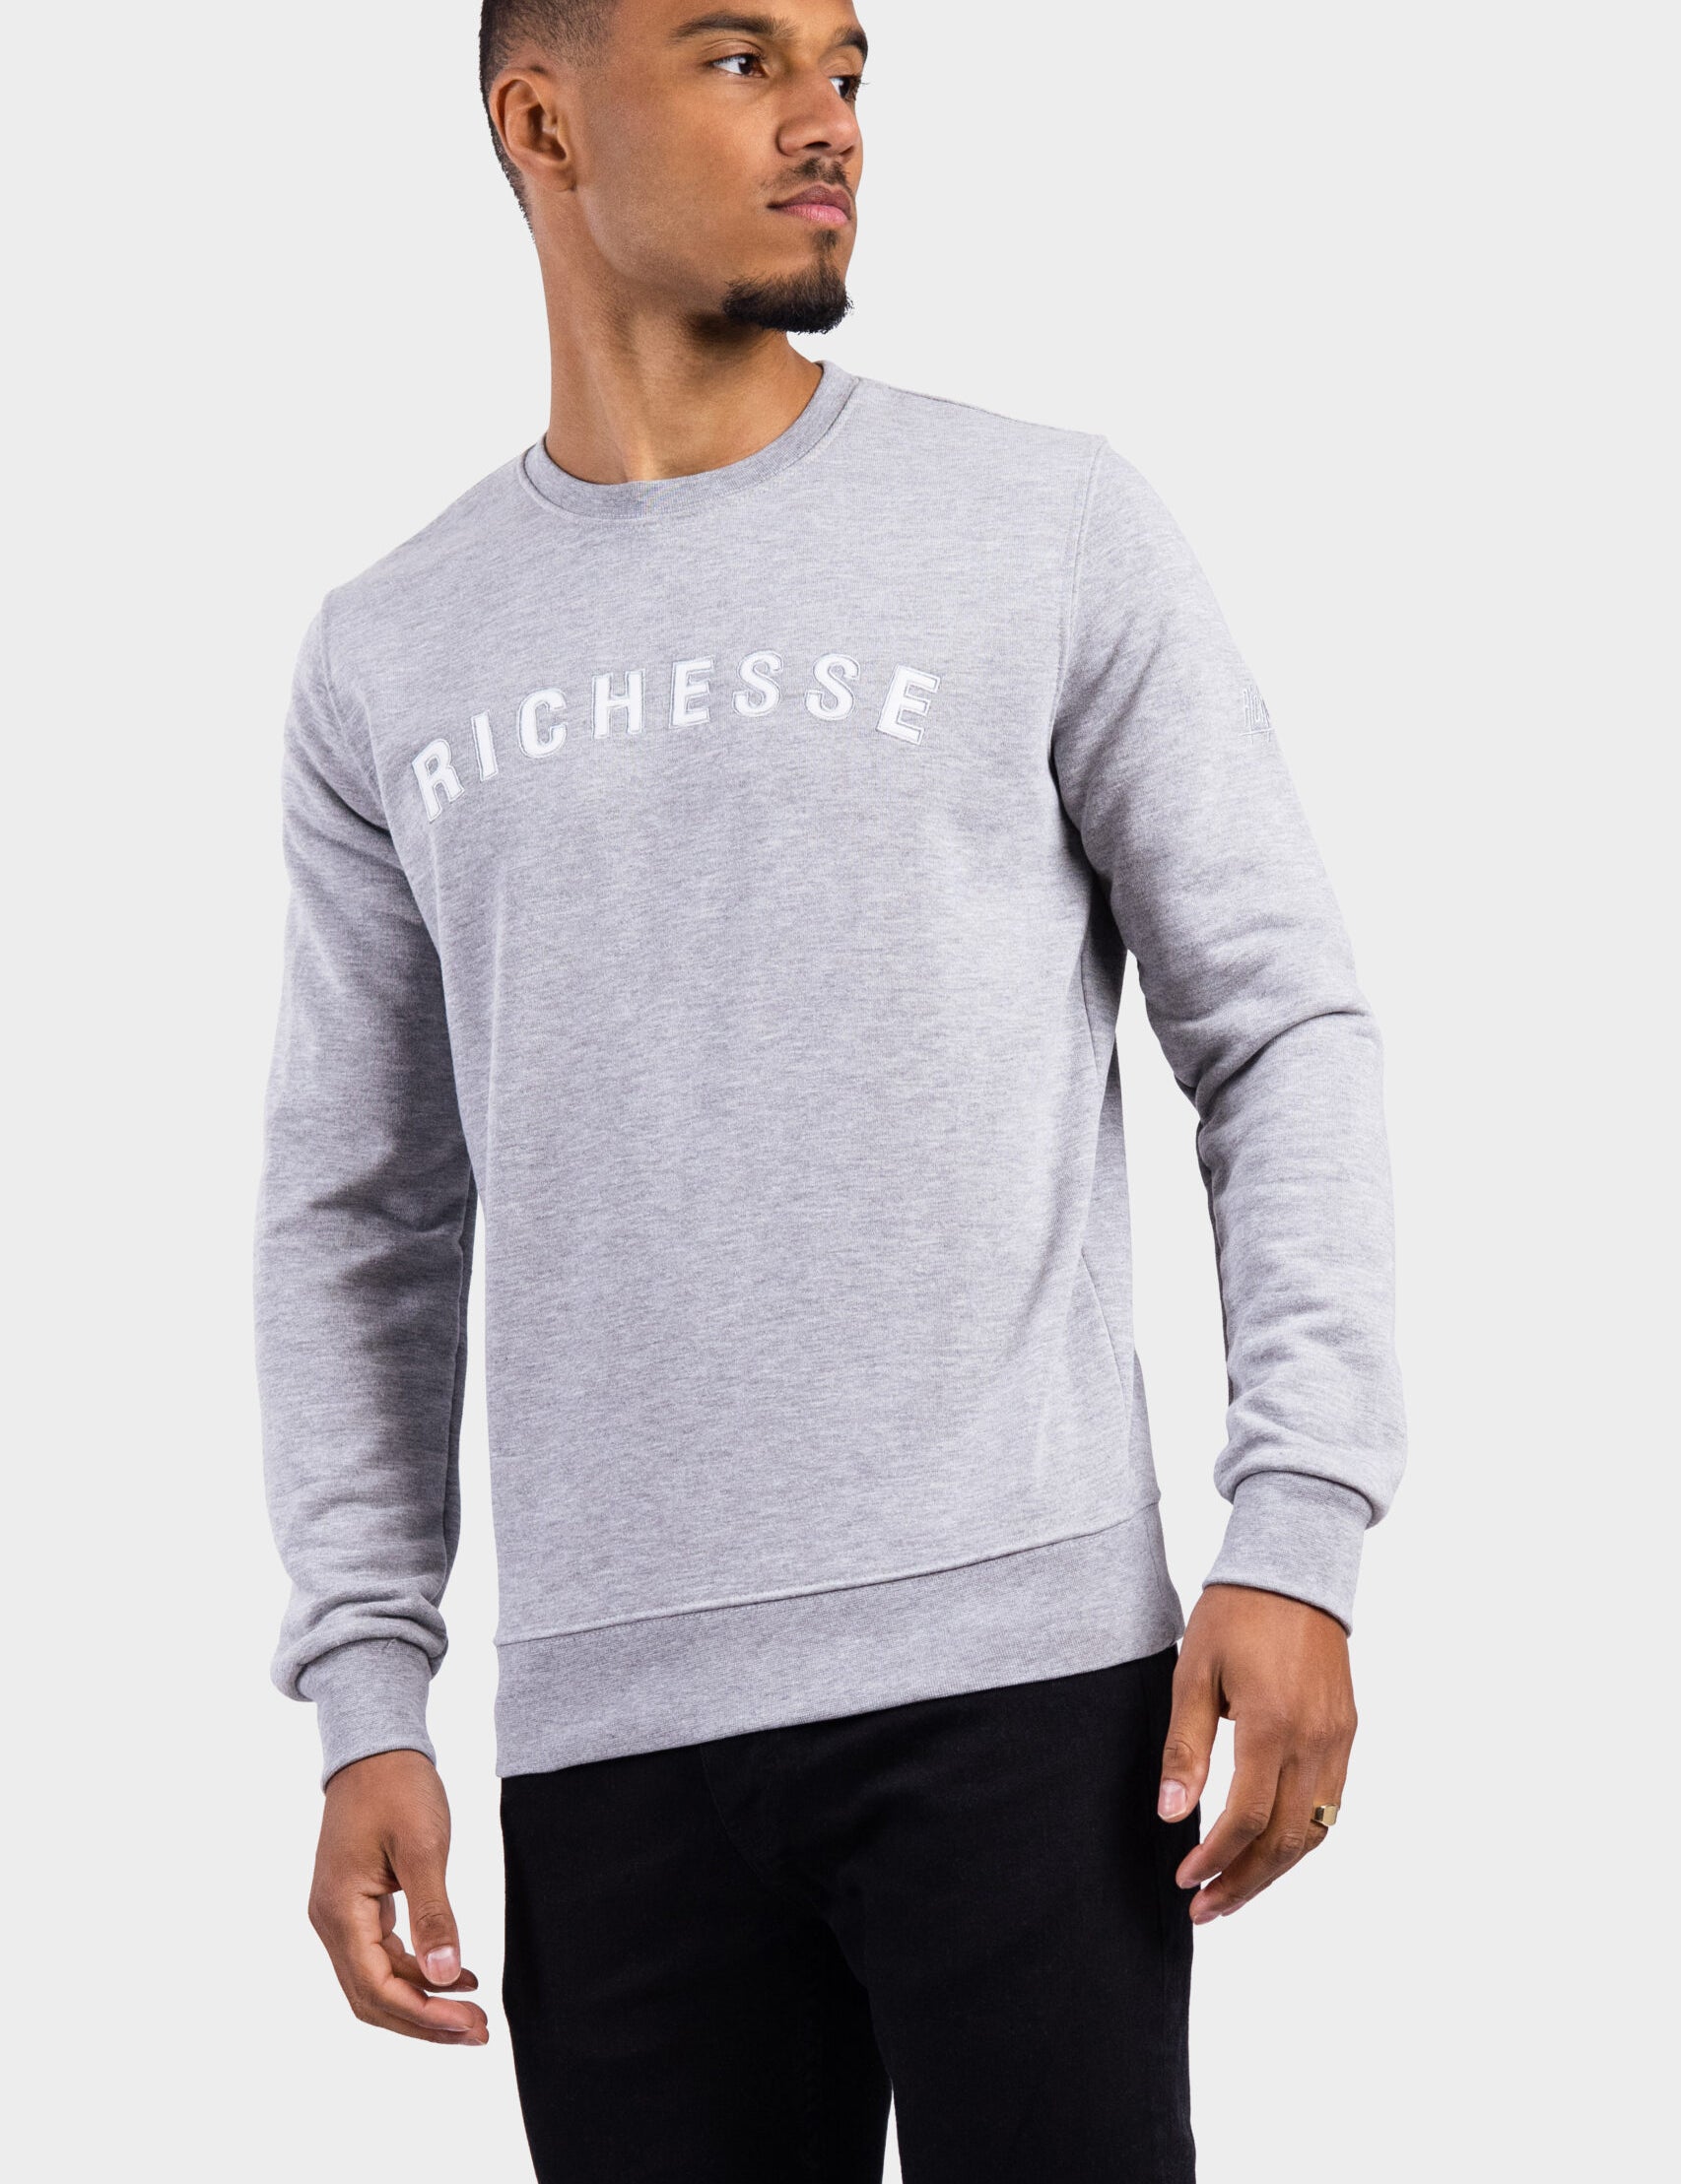 Richesse Sweater Grey